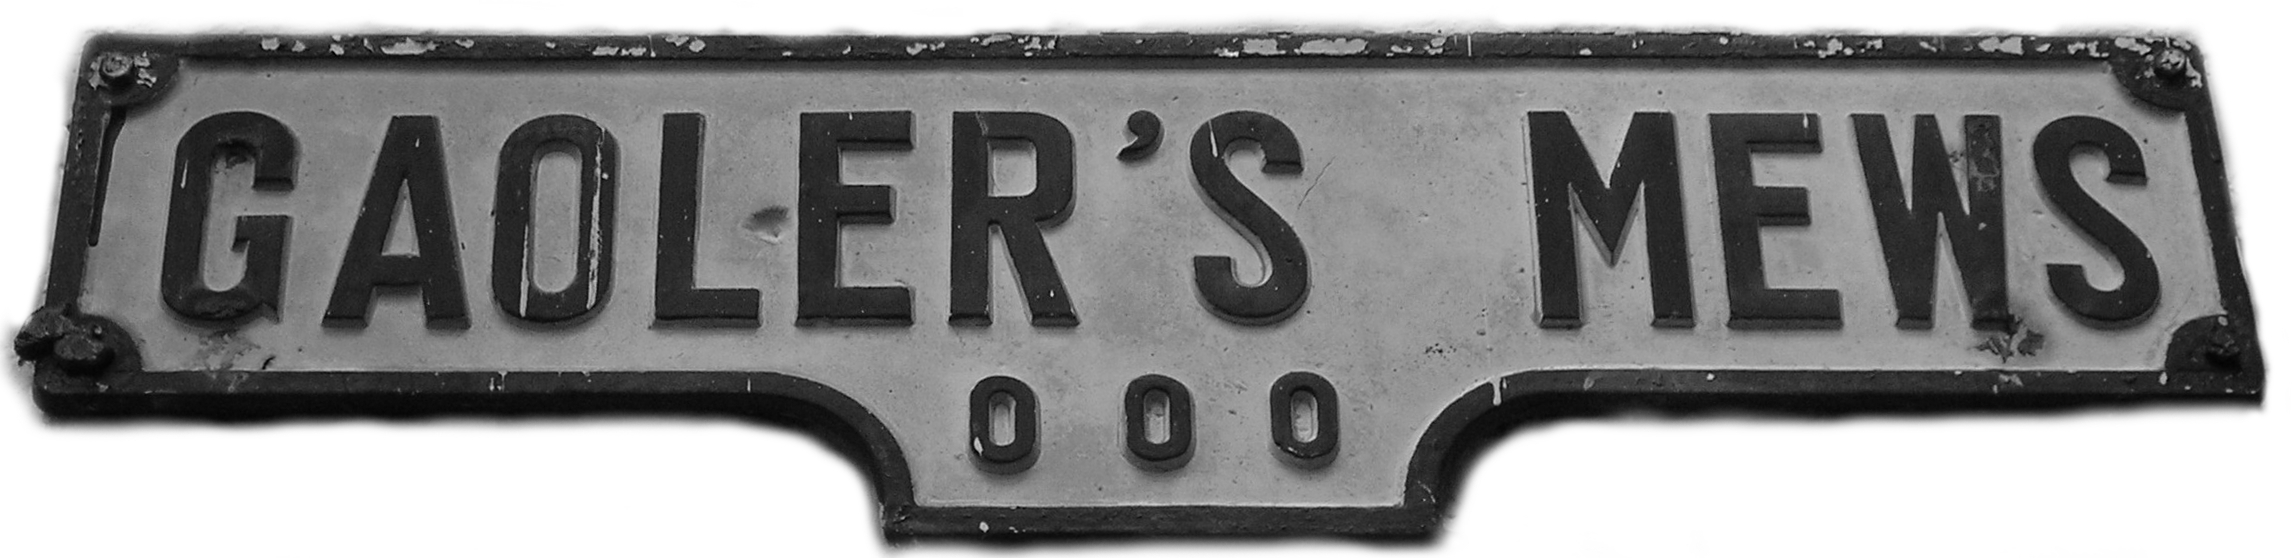 Gaoler's Mews Sign